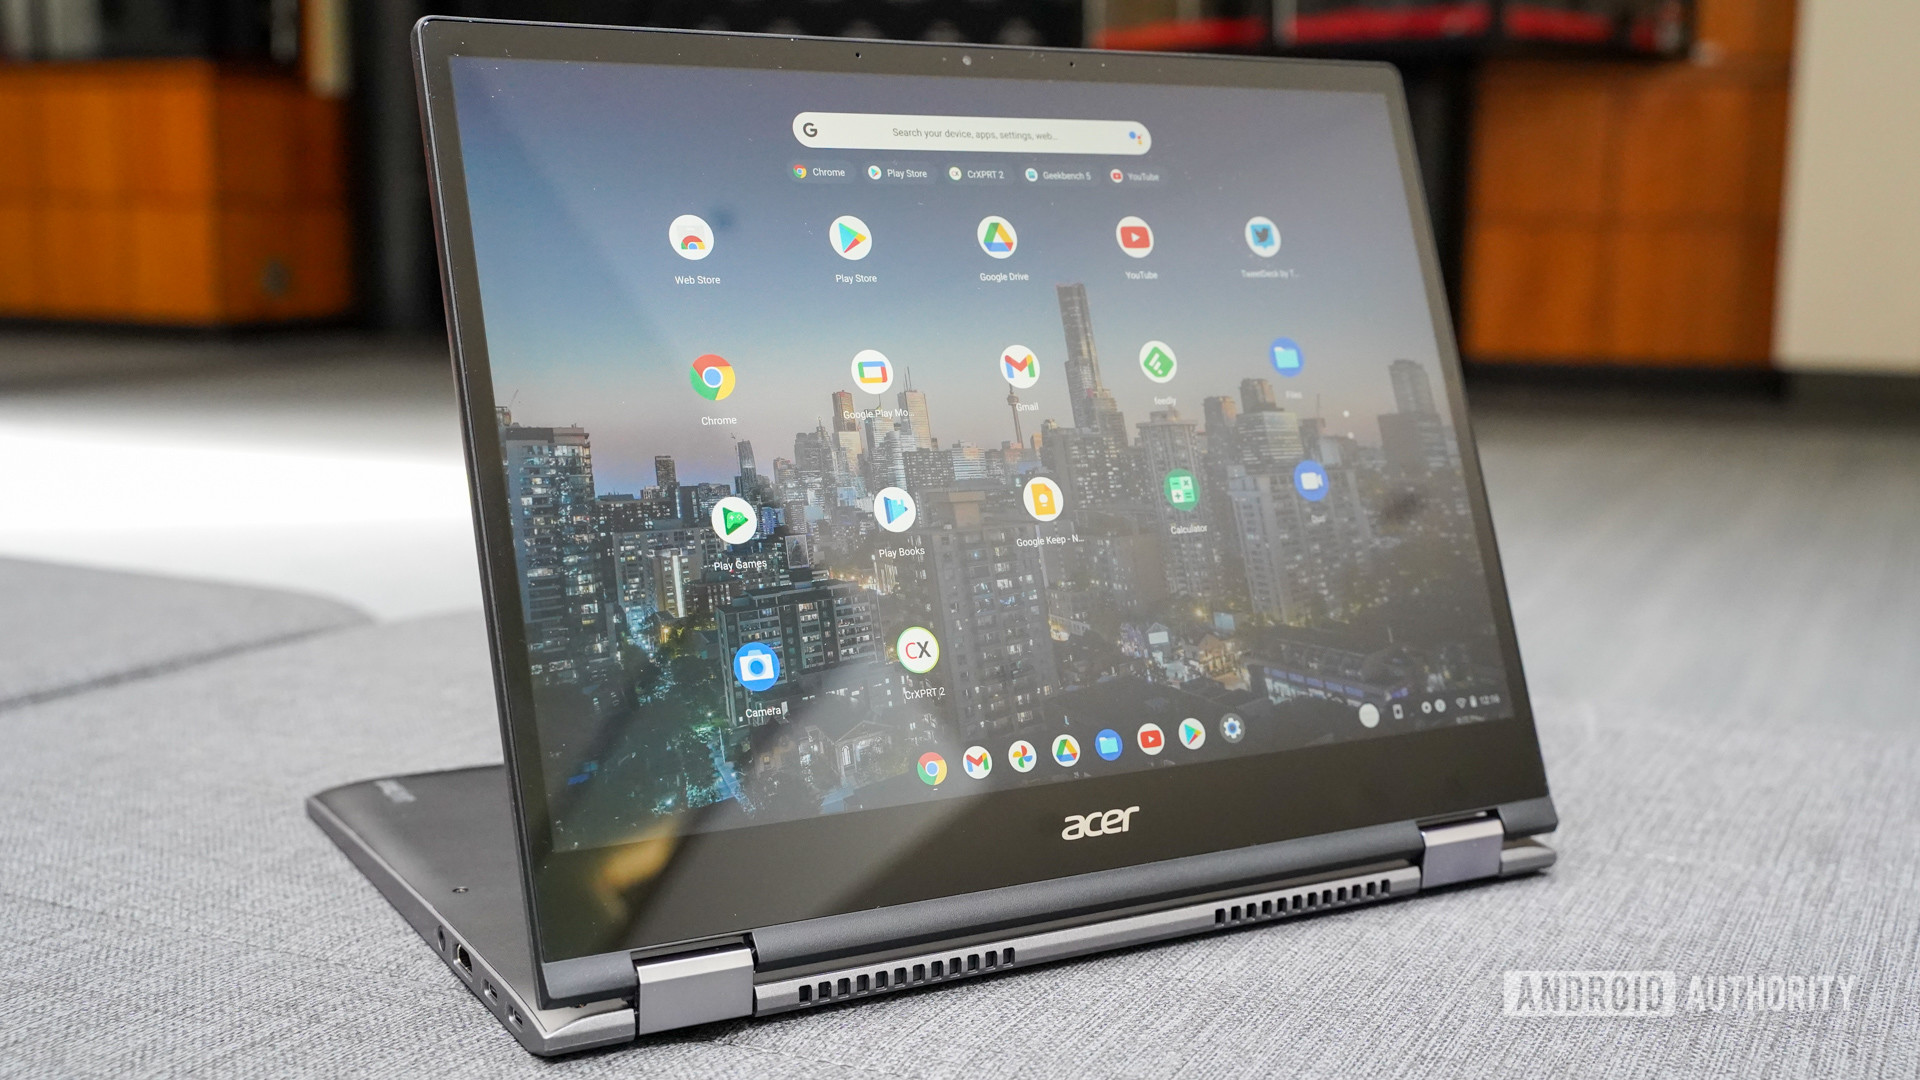 The Acer Chromebook Spin 713 presentation mode.